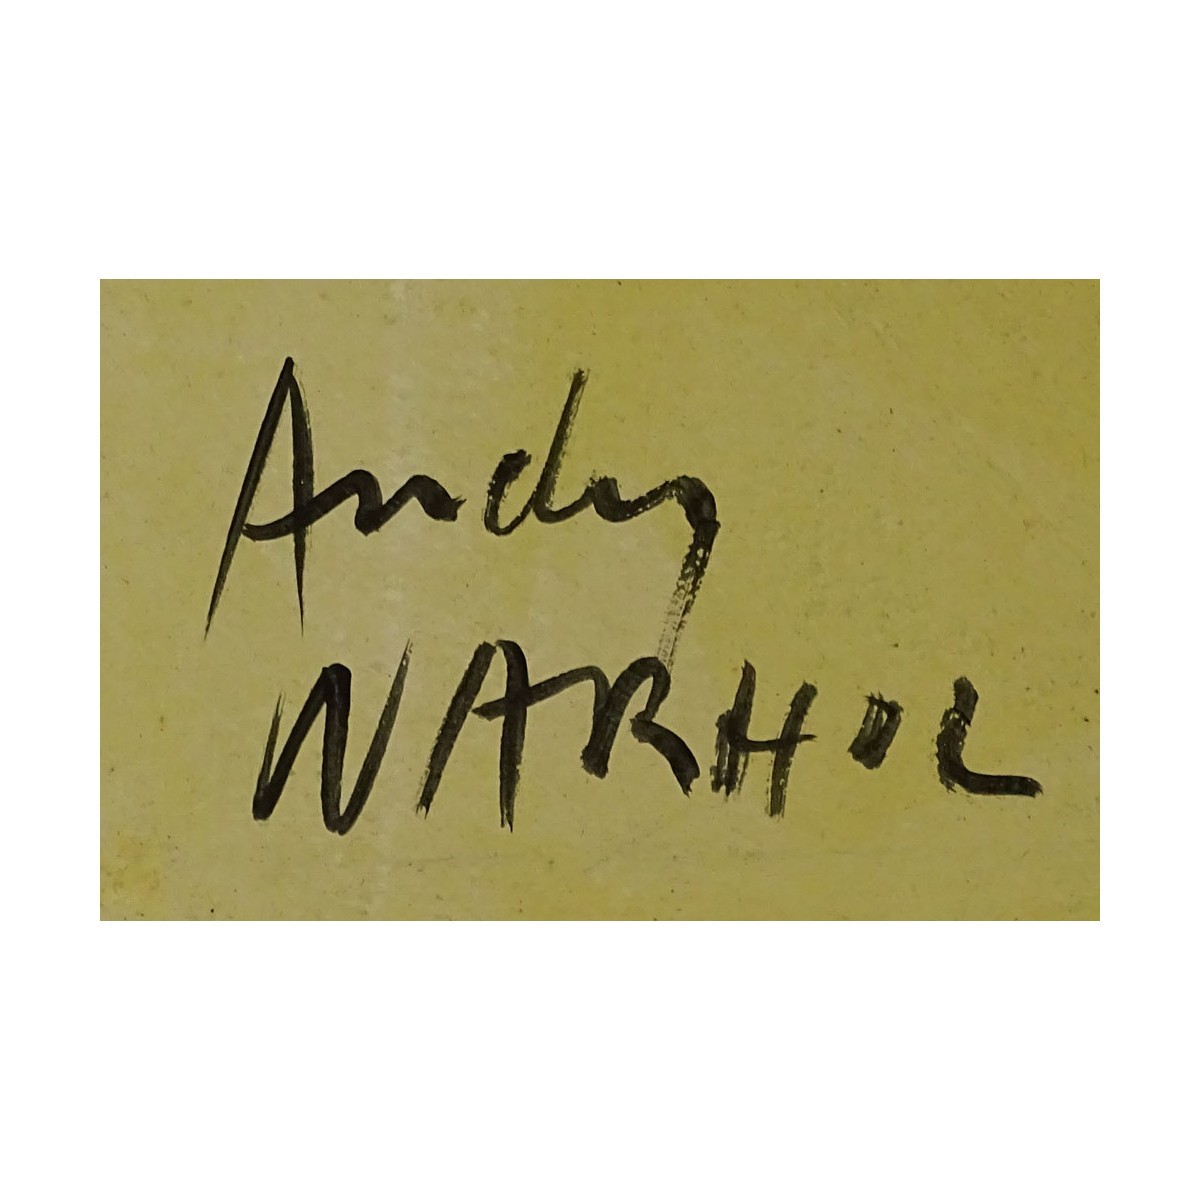 Peter Keil (b. 1942 ) Acrylic/Canvas "Andy Warhol"